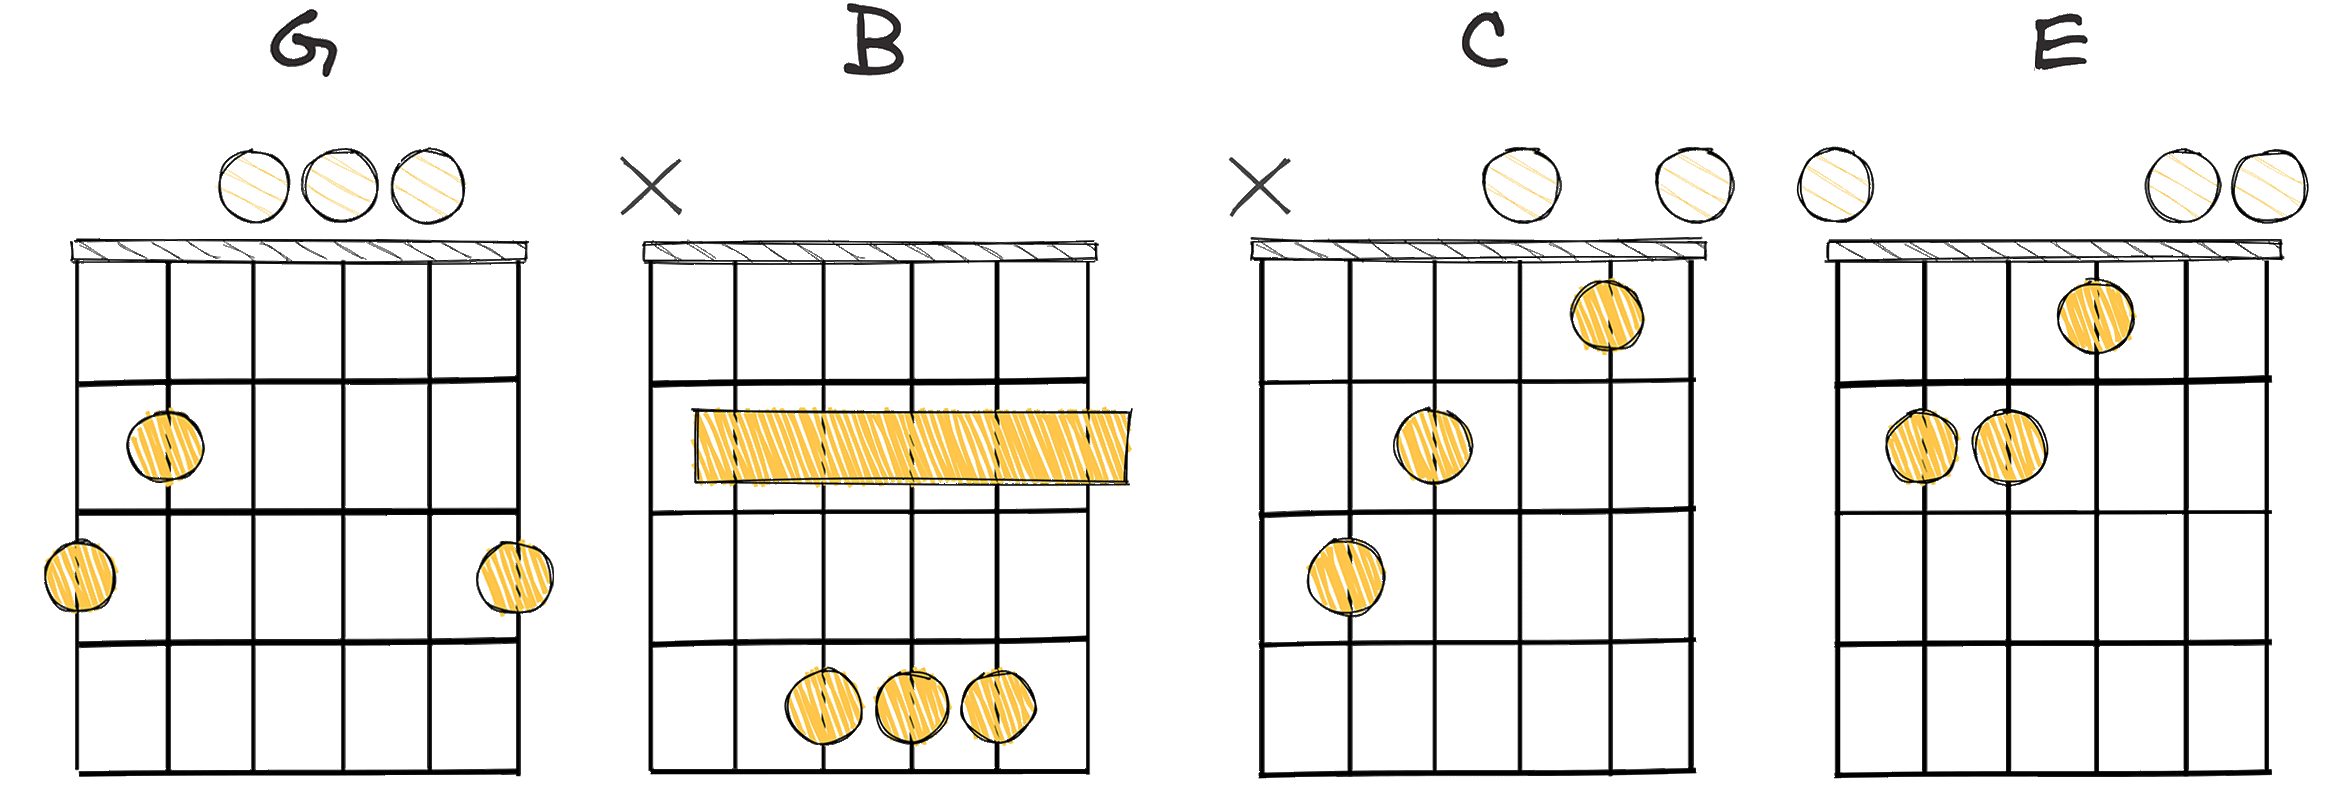 I-III-IV-VI (1-3-4-6) chords diagram